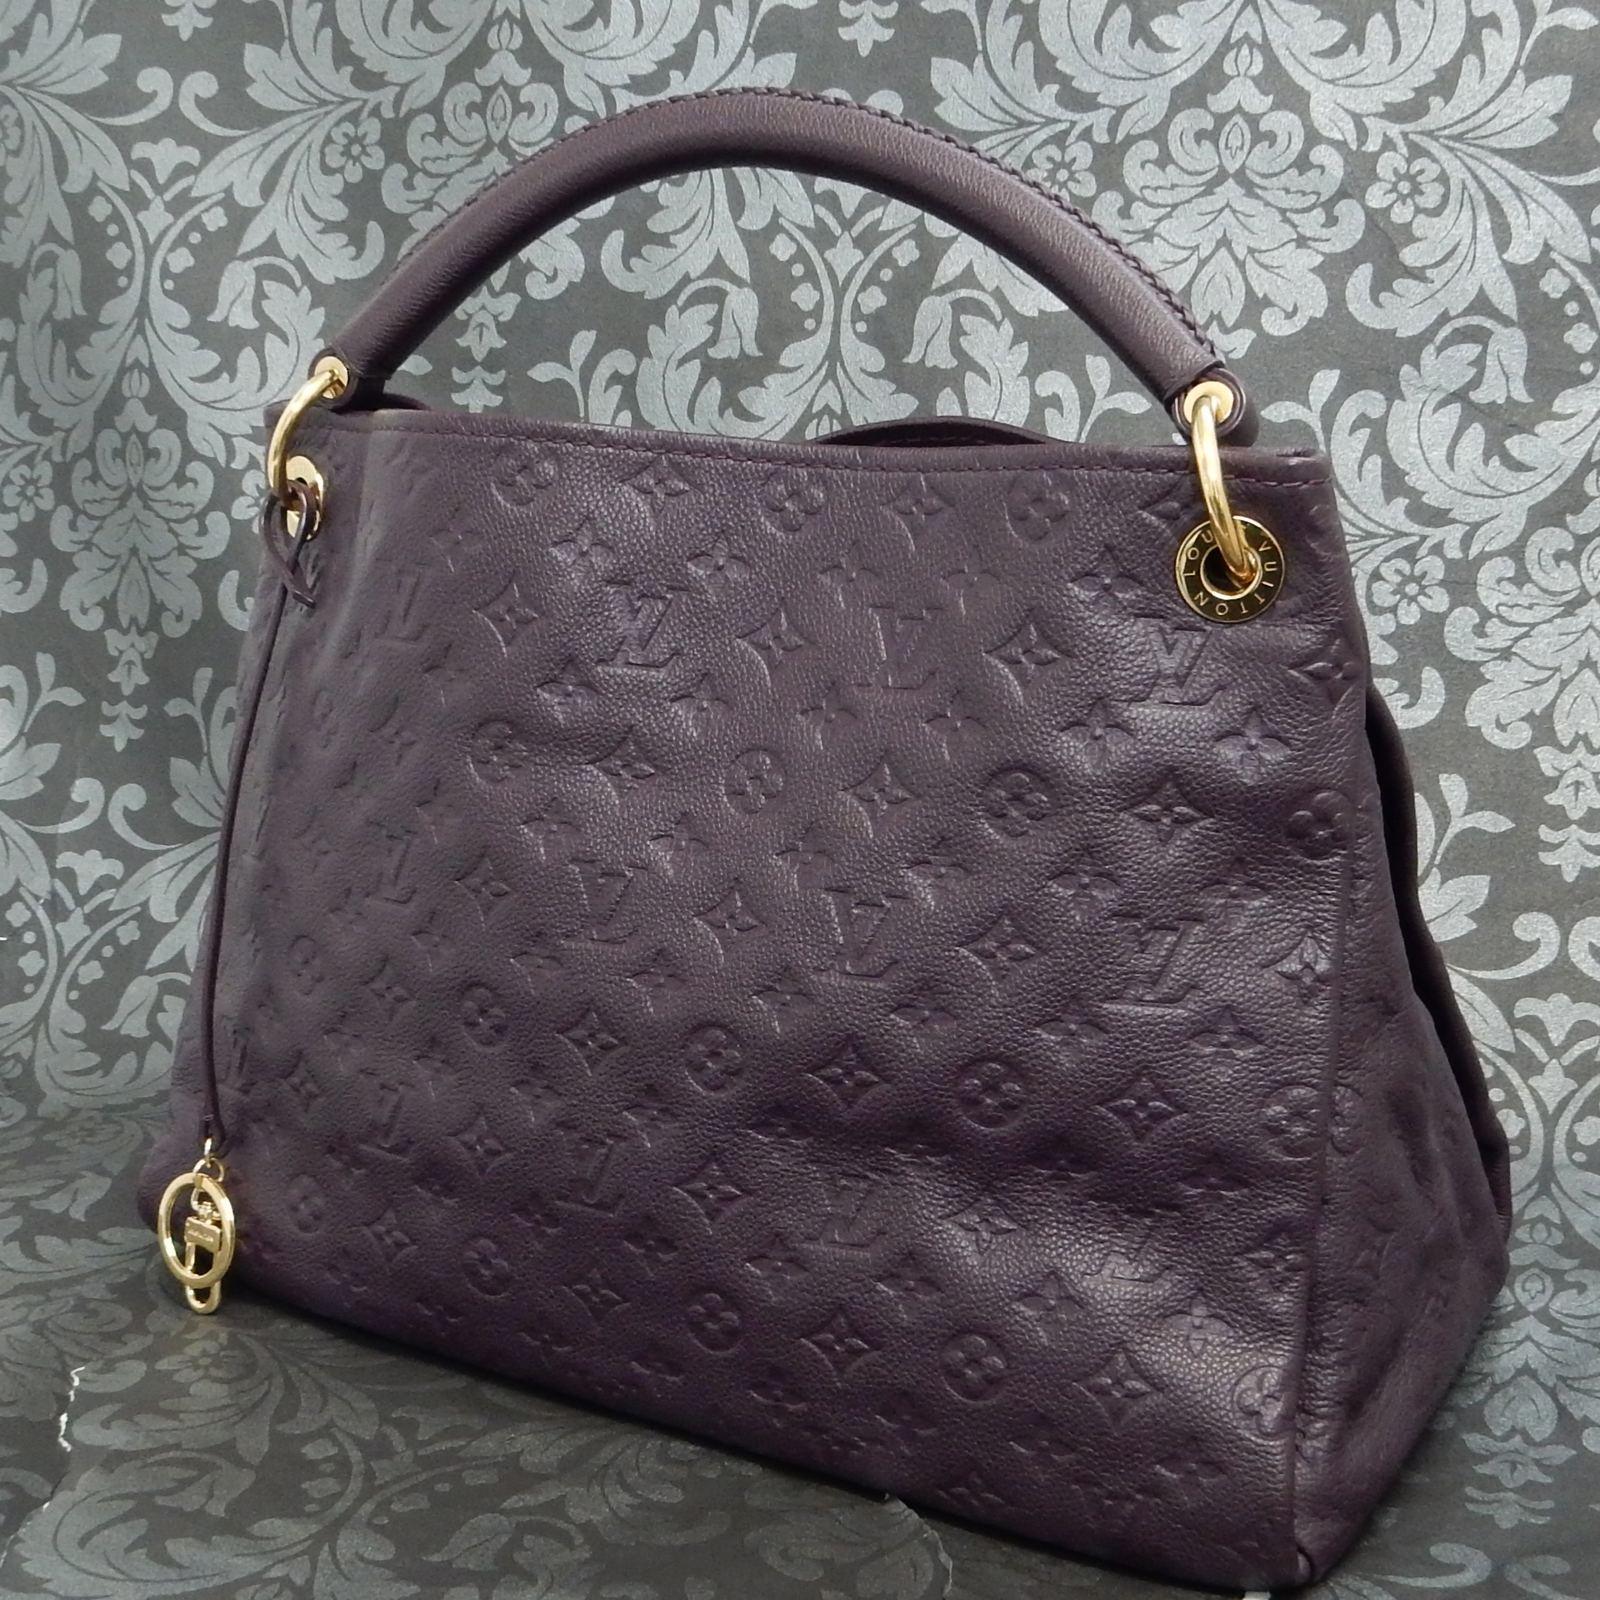 Rise-on LOUIS VUITTON MONOGRAM Empreinte Artsy Purple MM Handbag Purse #3